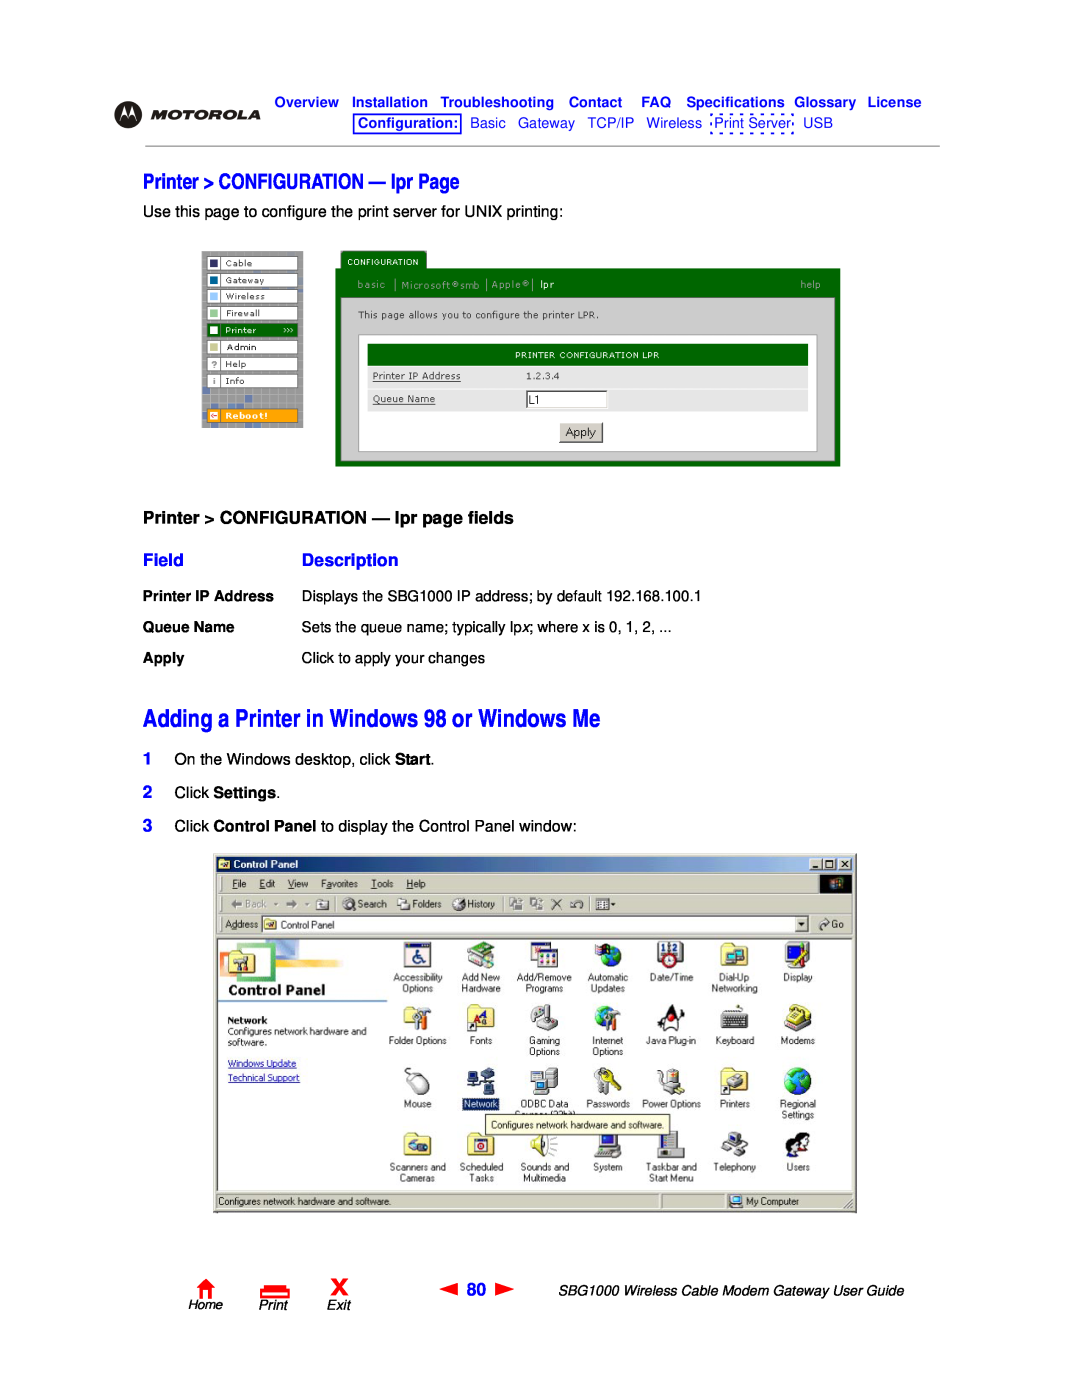 Motorola SBG1000 Adding a Printer in Windows 98 or Windows Me, Printer CONFIGURATION - lpr Page, Click Settings, Field 